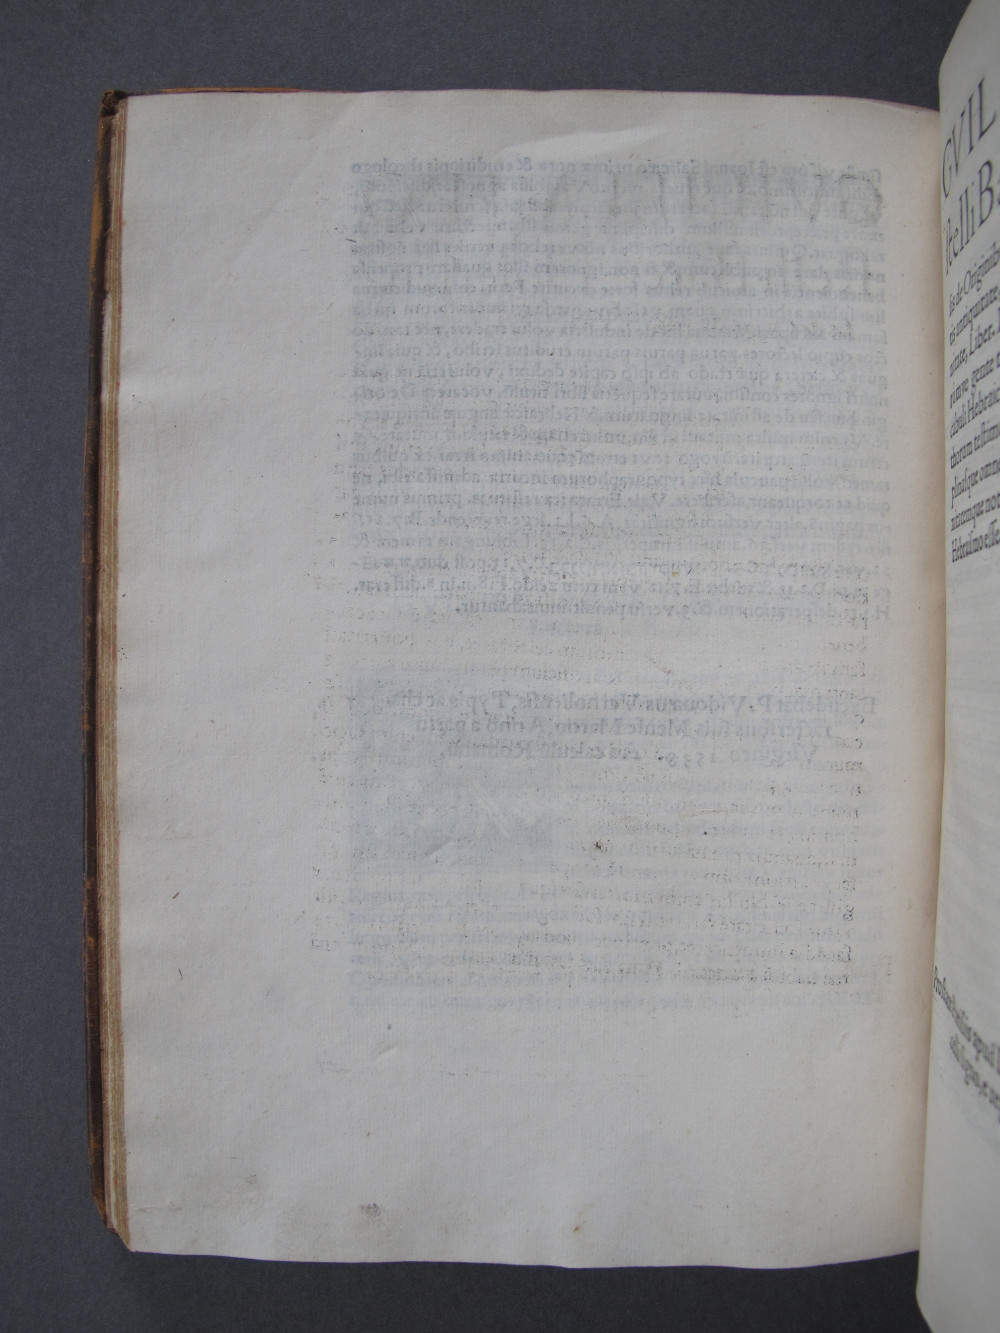 Folio I6 verso